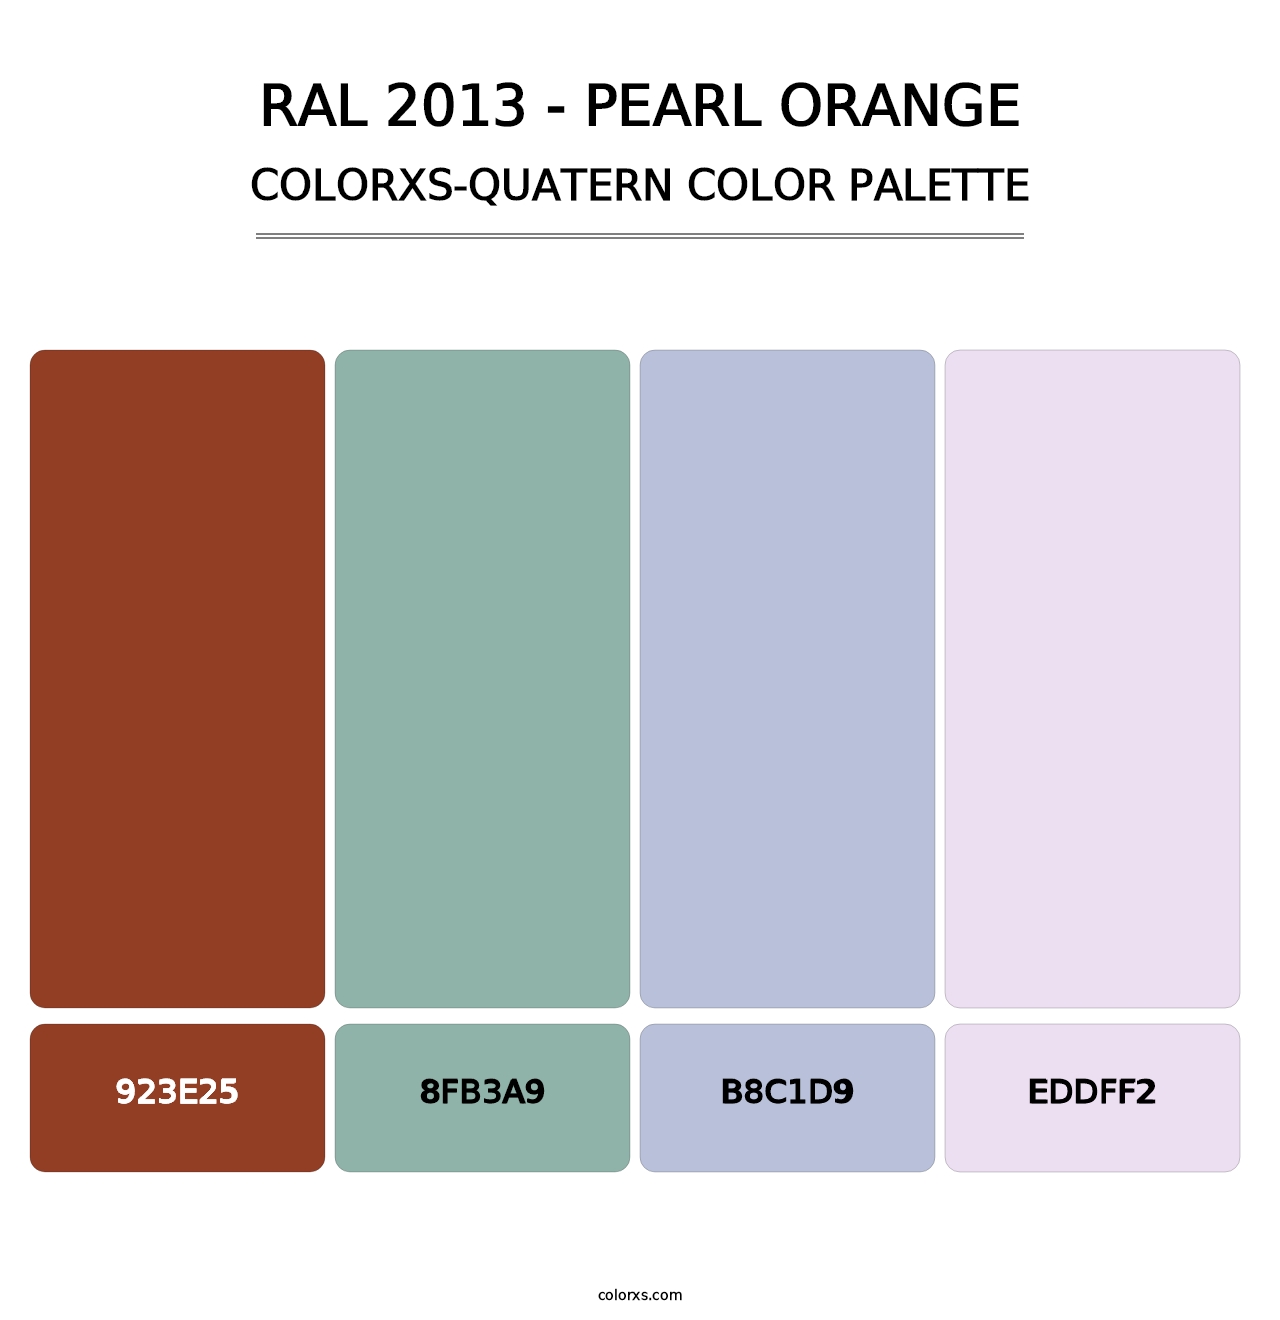 RAL 2013 - Pearl Orange - Colorxs Quatern Palette